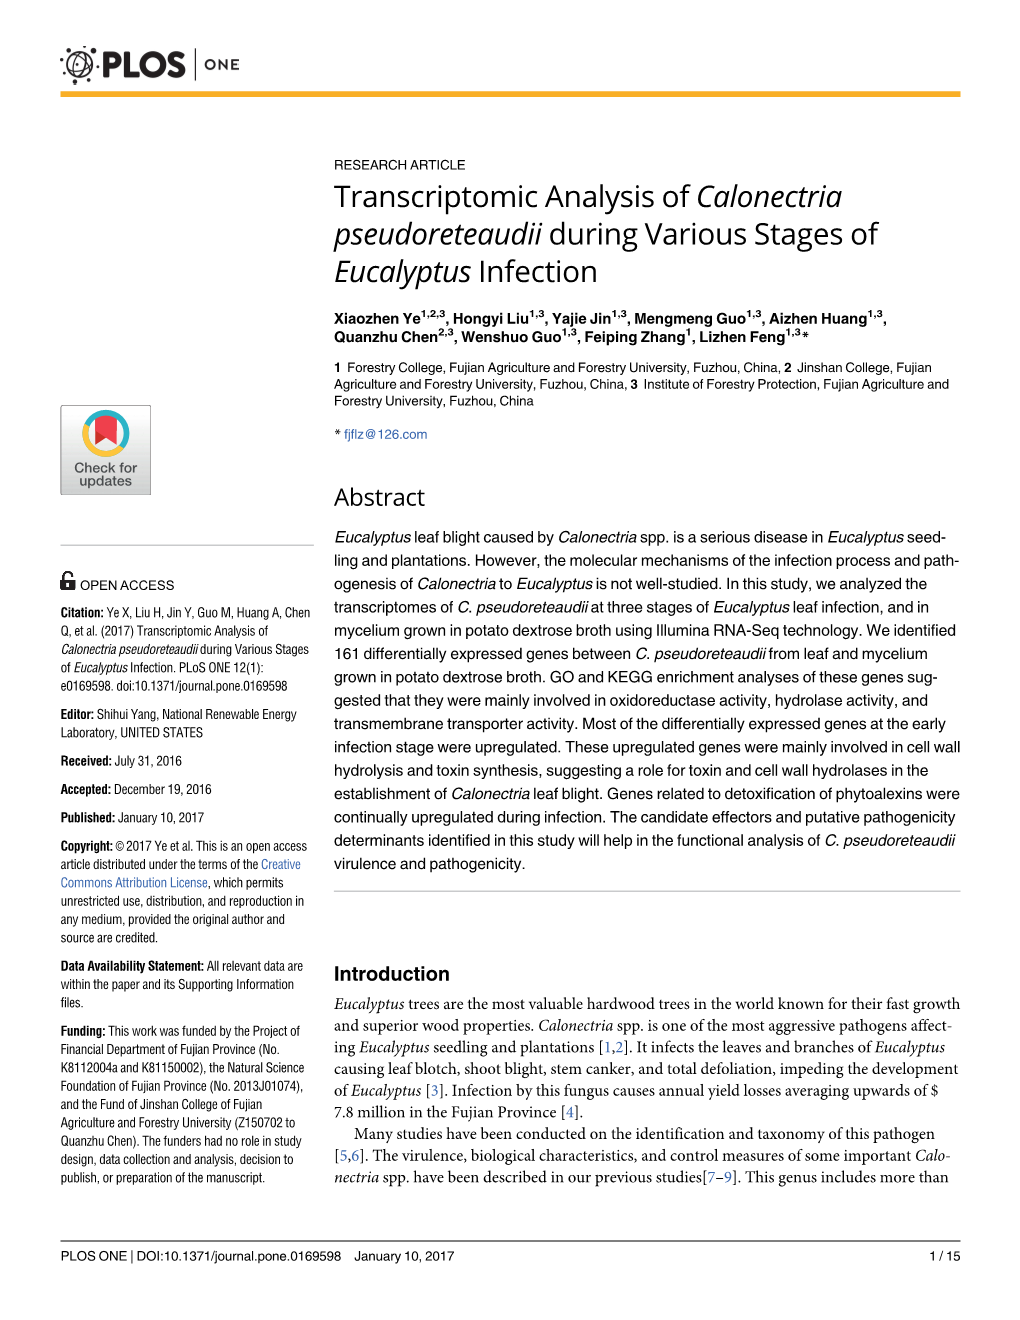 Transcriptomic Analysis of Calonectria Pseudoreteaudii During Various Stages of Eucalyptus Infection